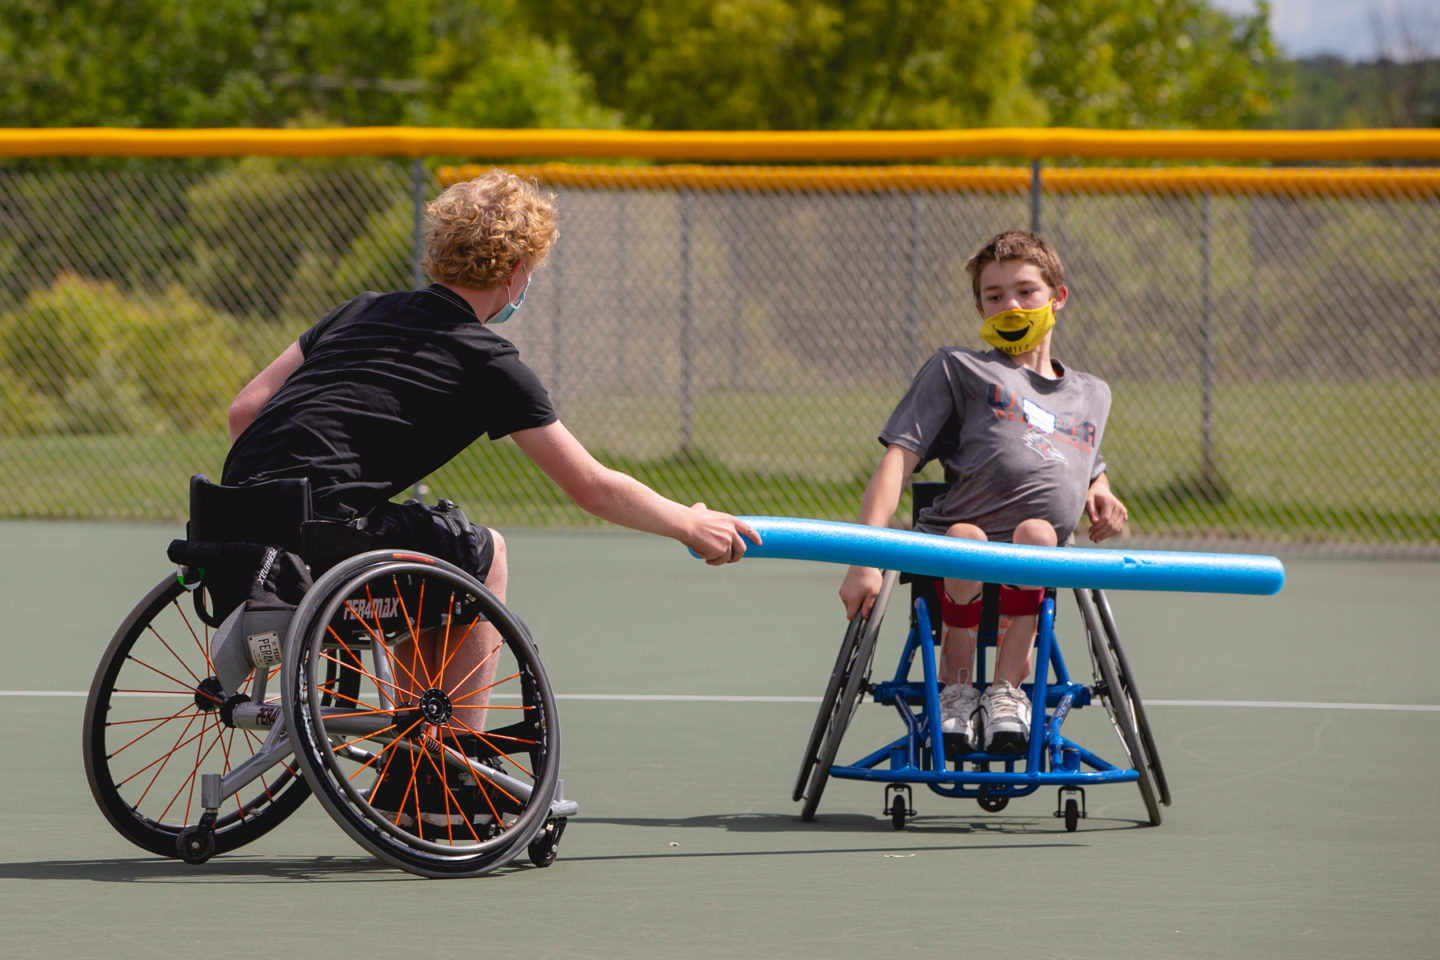 Jr Wheelchair Sports Field Day 2020